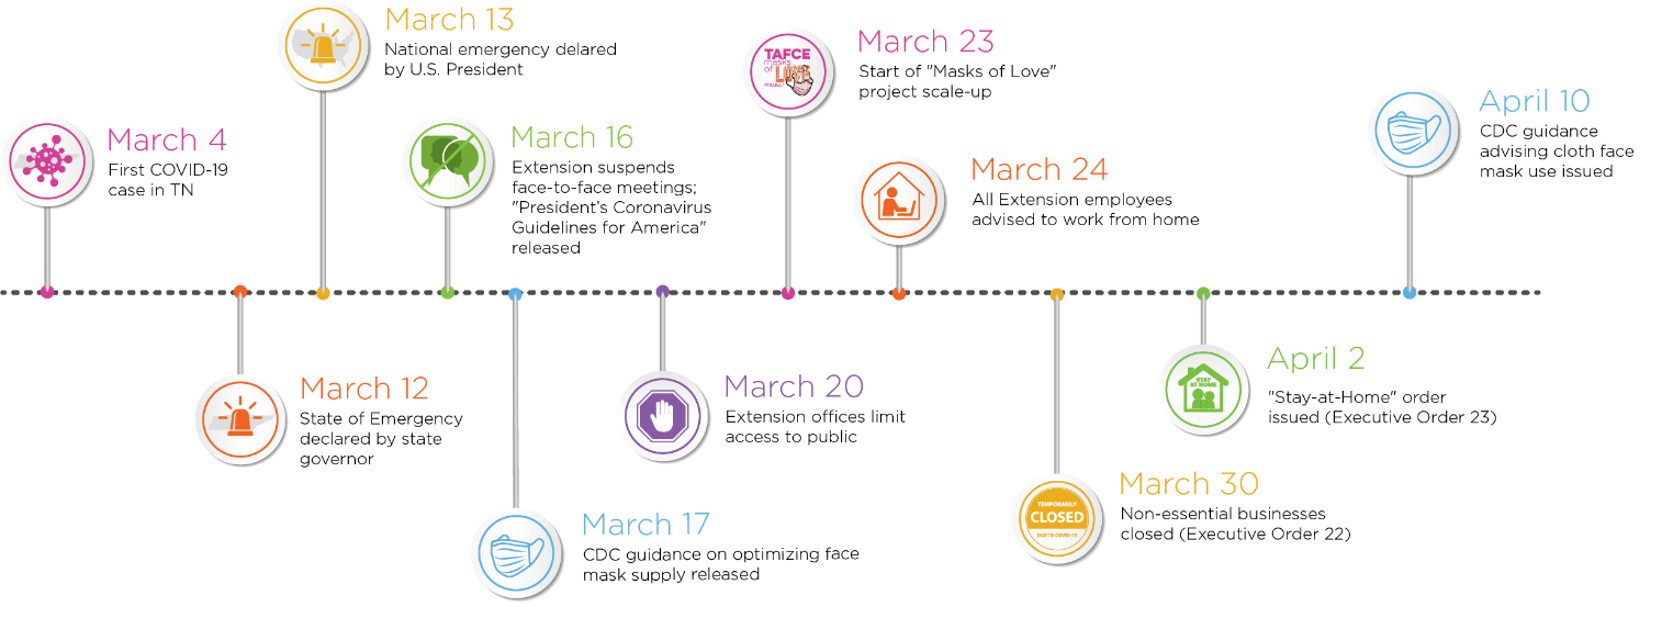 Timeline of key events